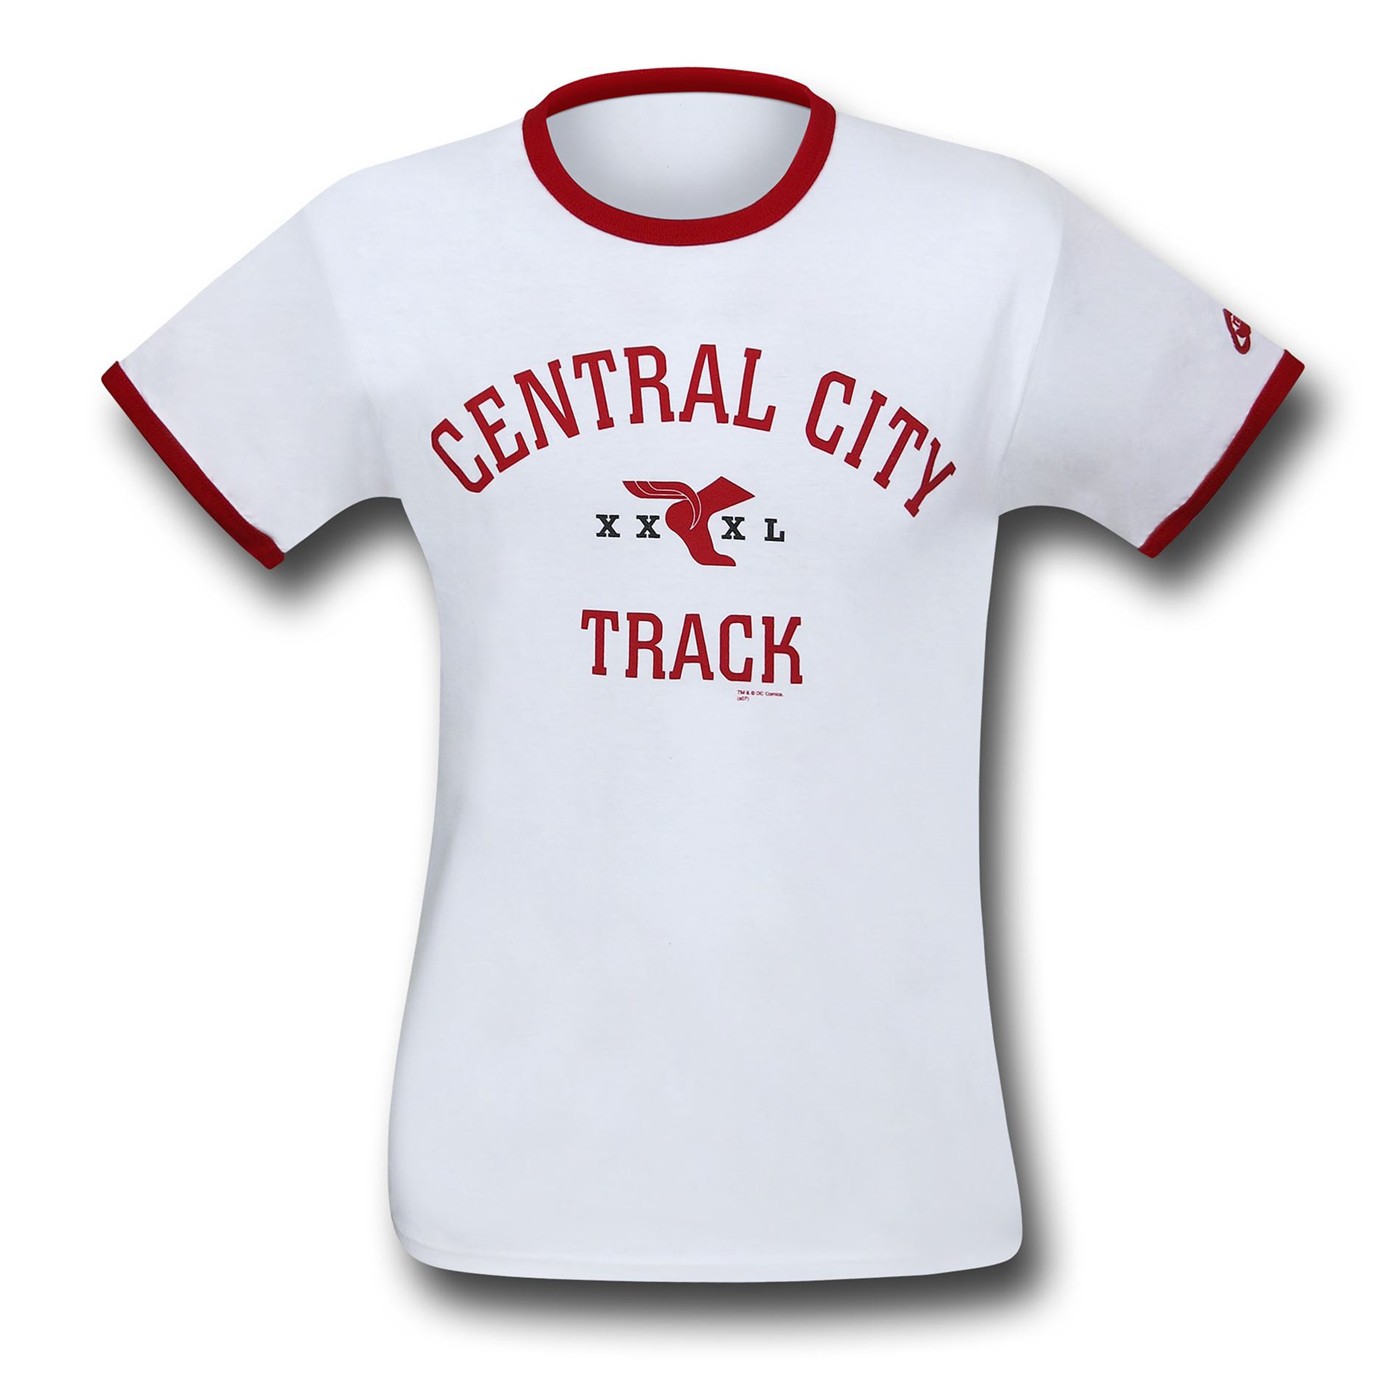 Flash Central City Track Ringer T-Shirt